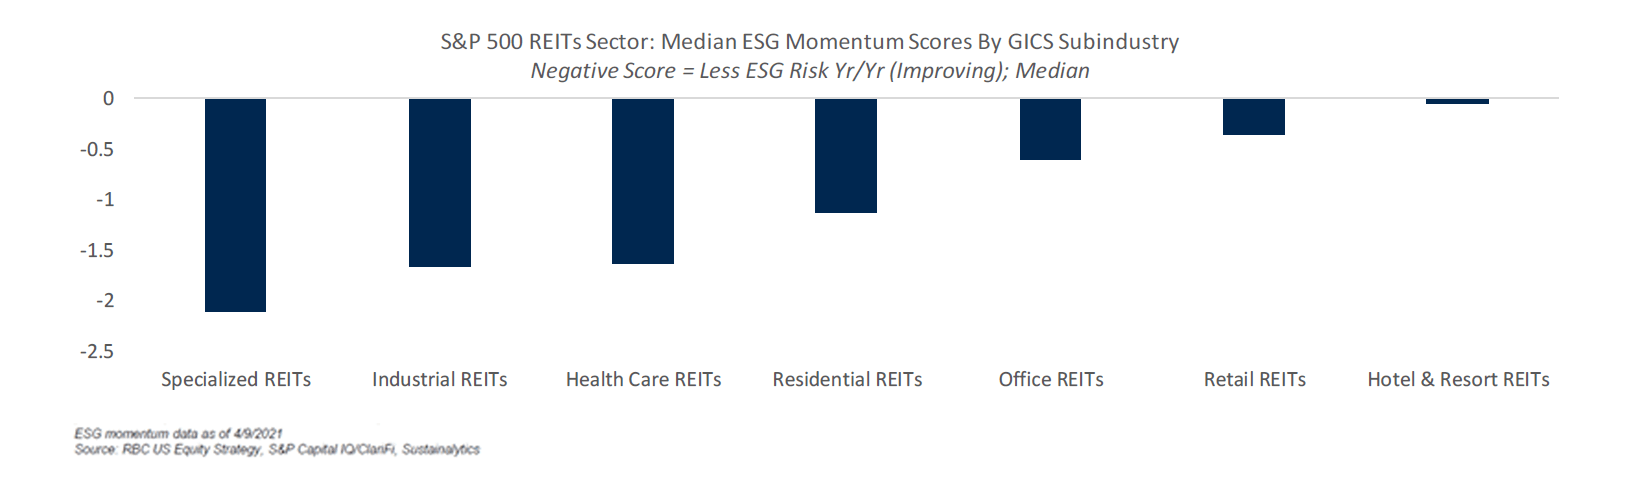 Median ESG momentum score by GICS subindustry